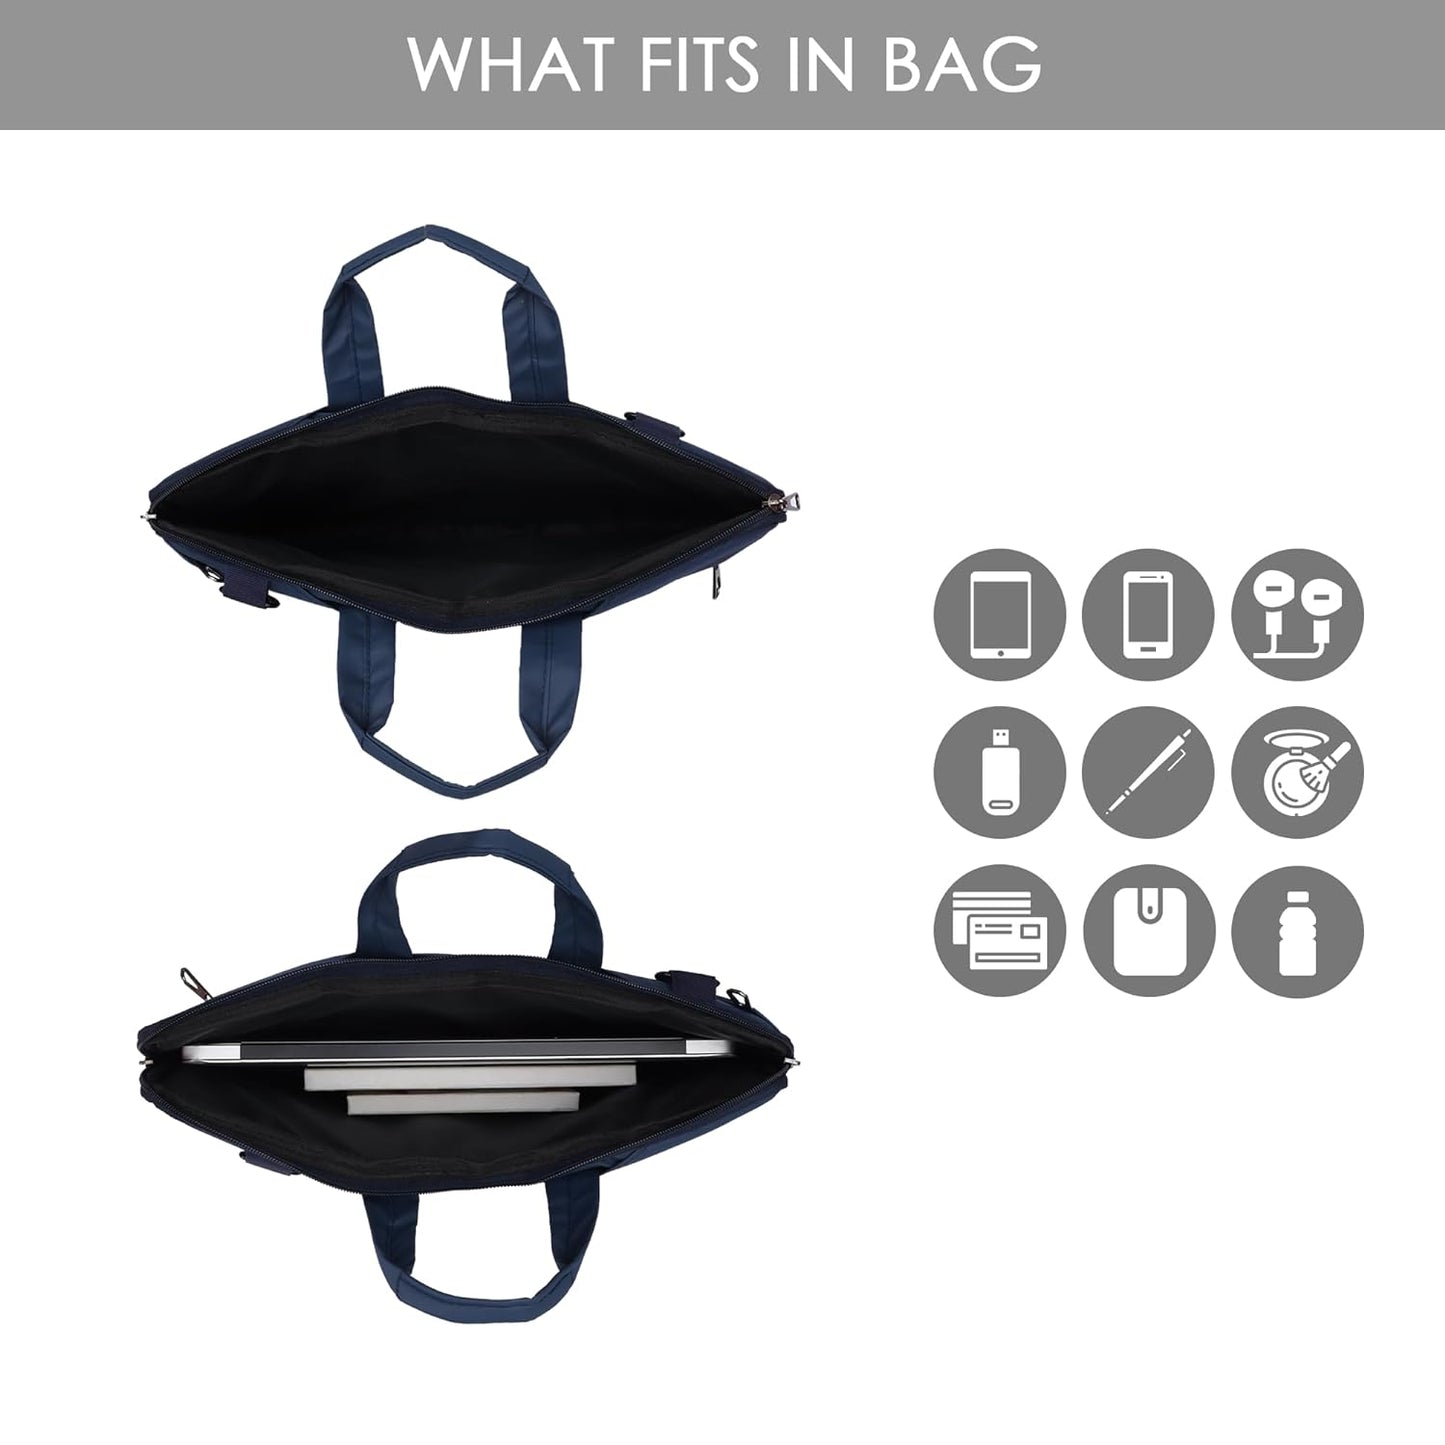 Krisons Somatic Laptop Messenger Bag with Adjustable Shoulder Strap, Padded Compartment & Storage Pockets, Water Resistence, Travel-Partner, Perfect for Laptop Upto 16" (Unisex)